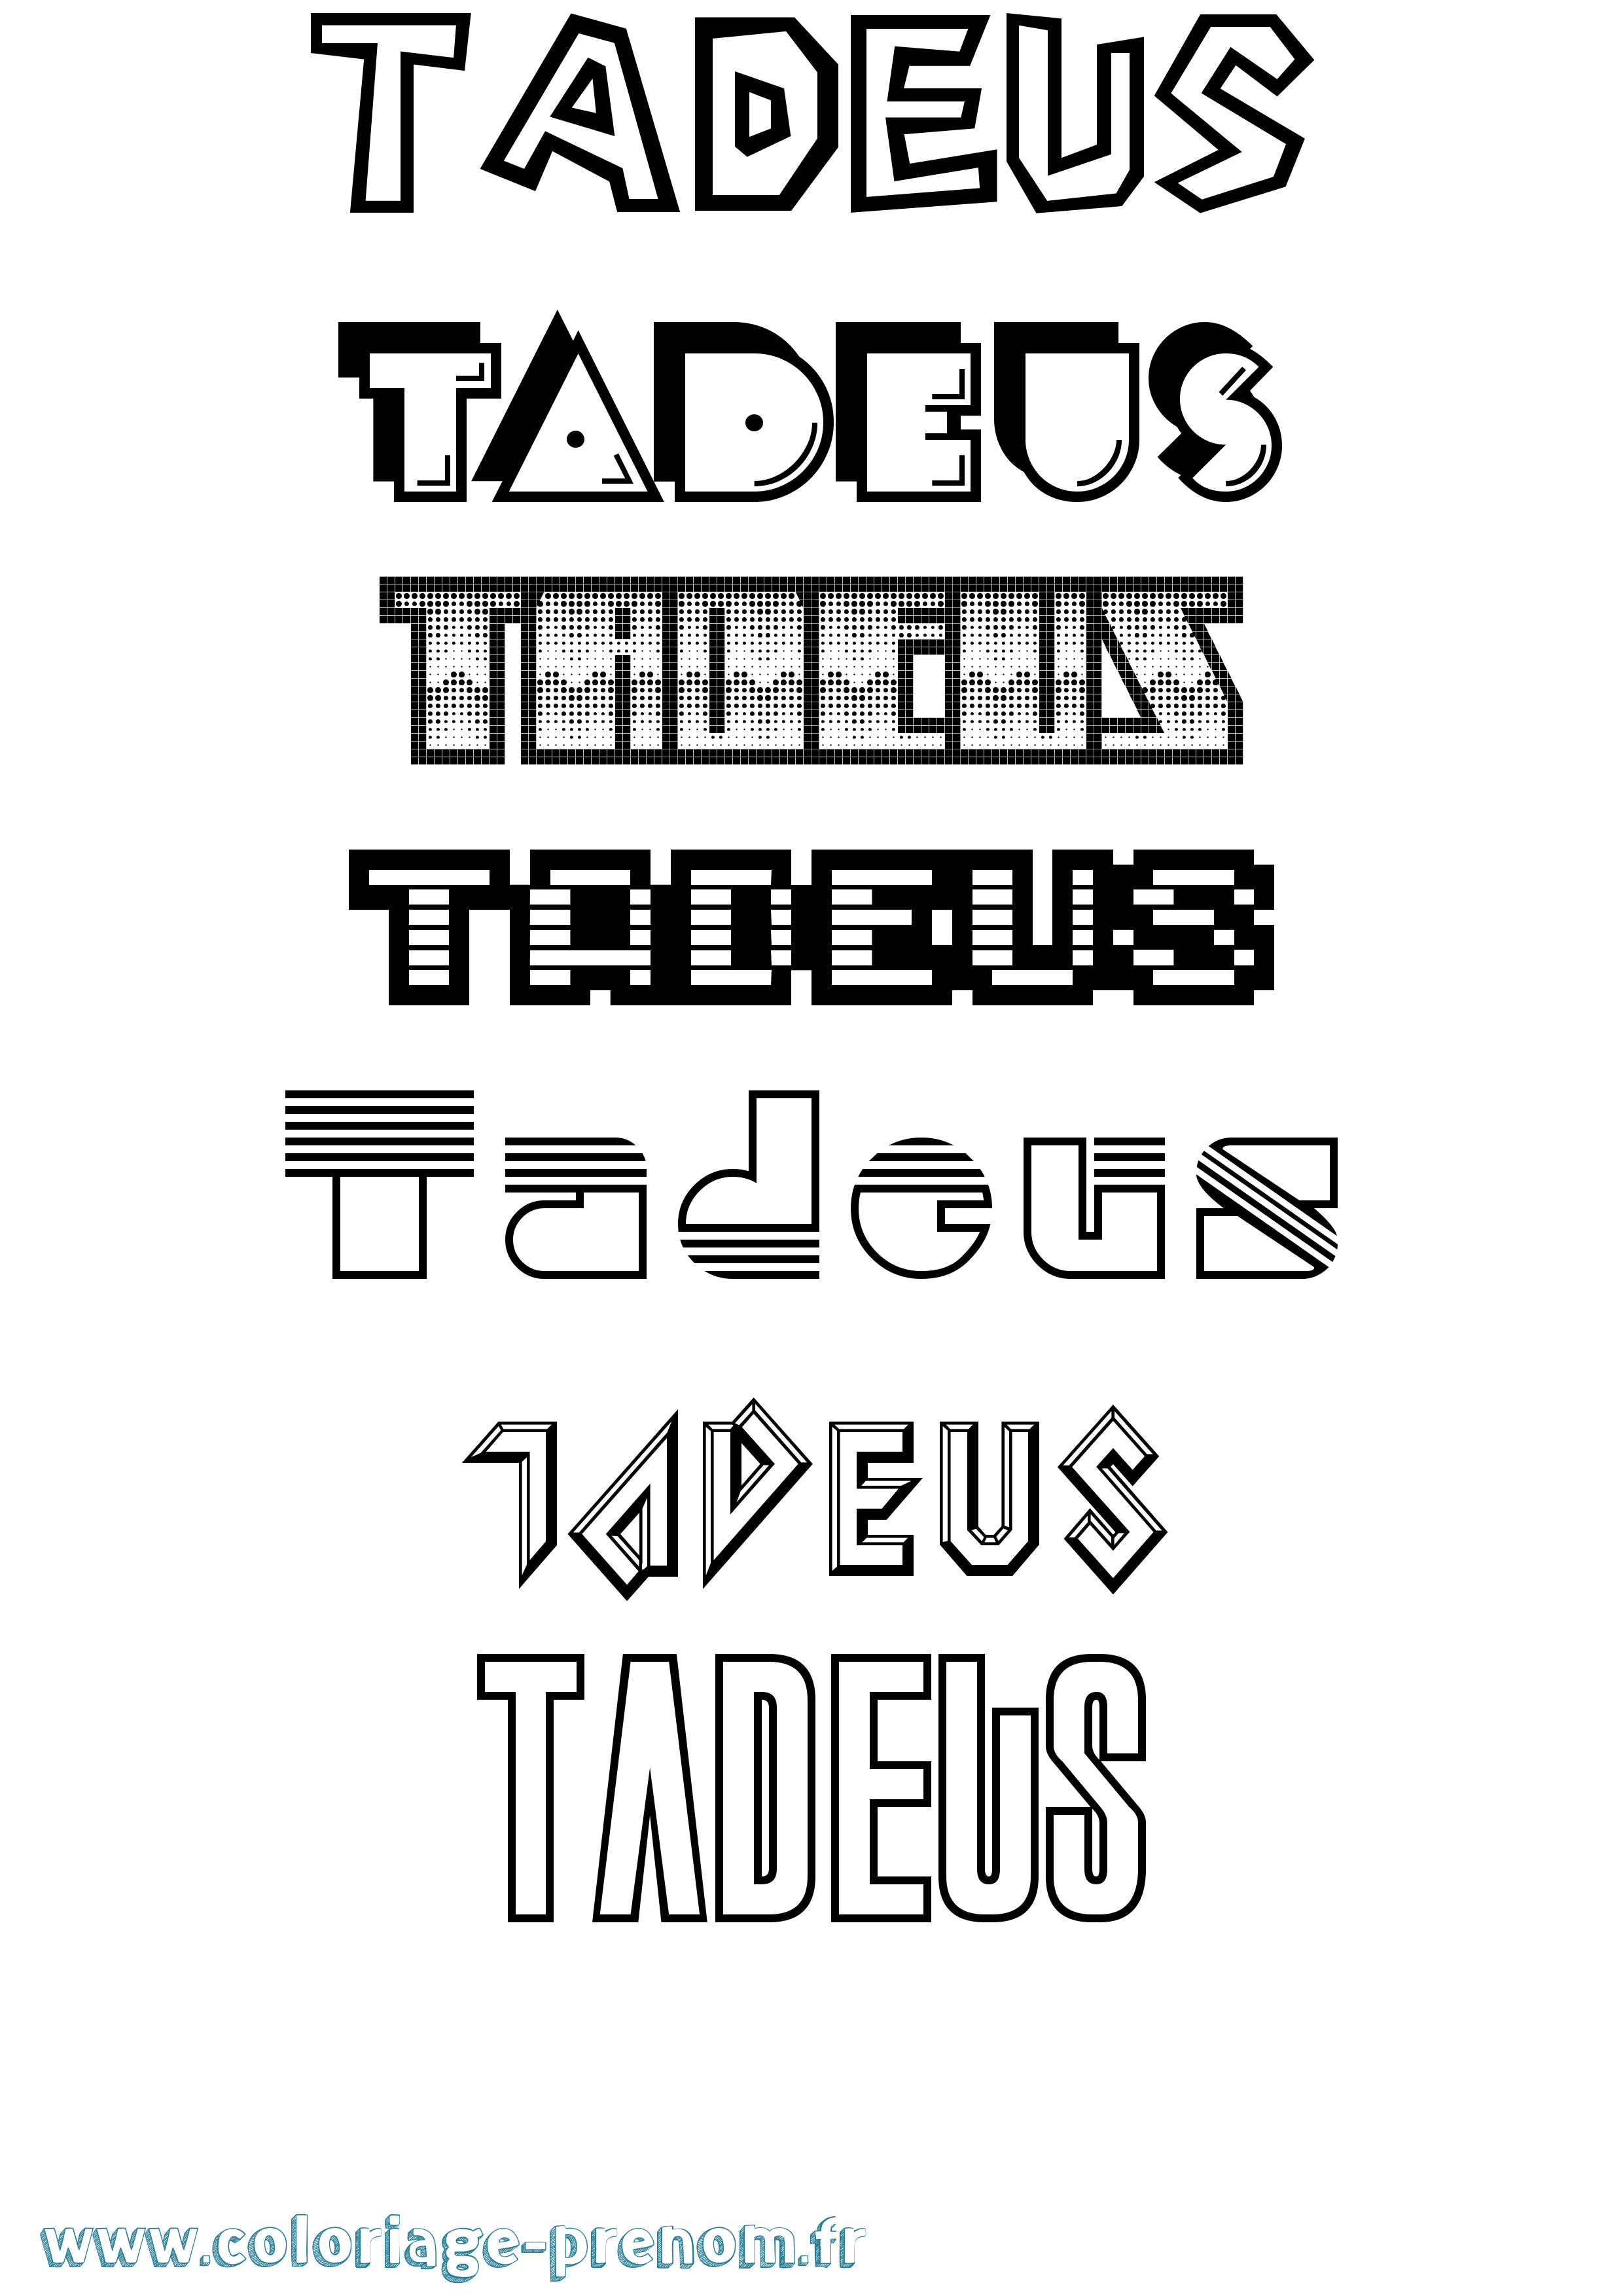 Coloriage prénom Tadeus Jeux Vidéos